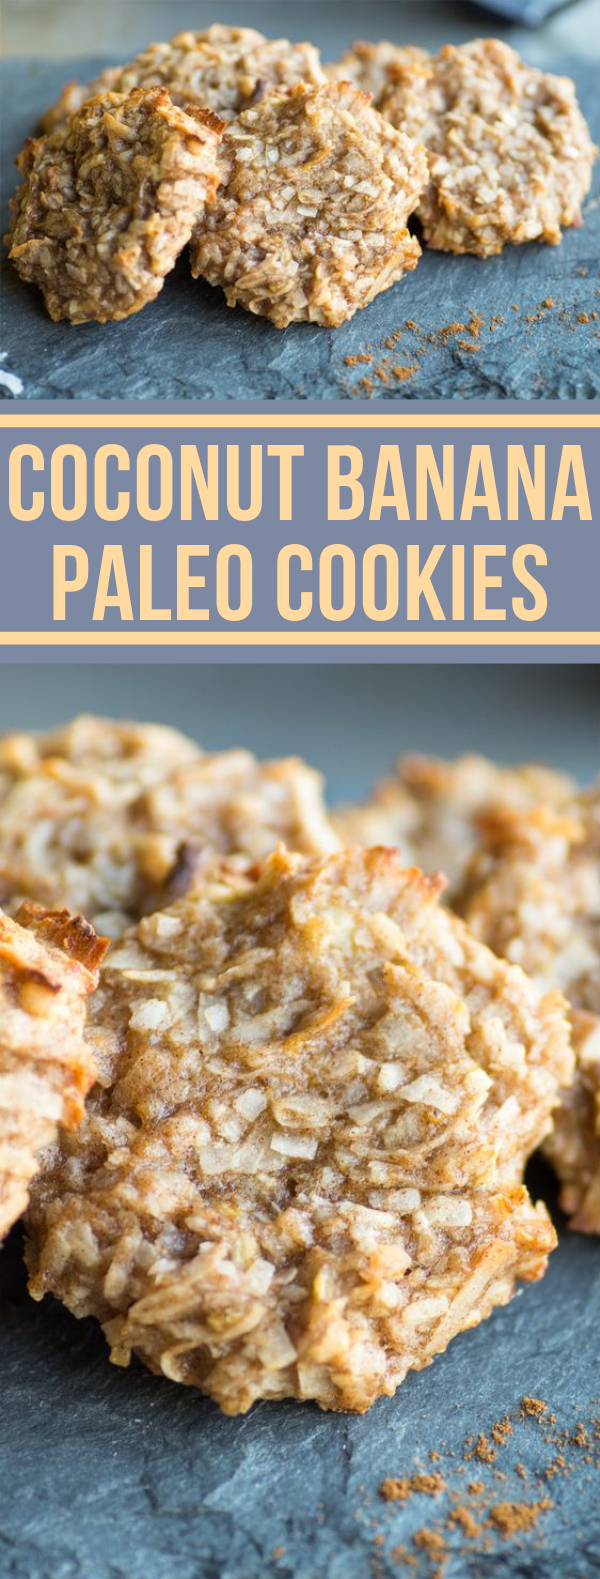 Coconut Banana Paleo Cookies #HealthyRecipe #glutenfree